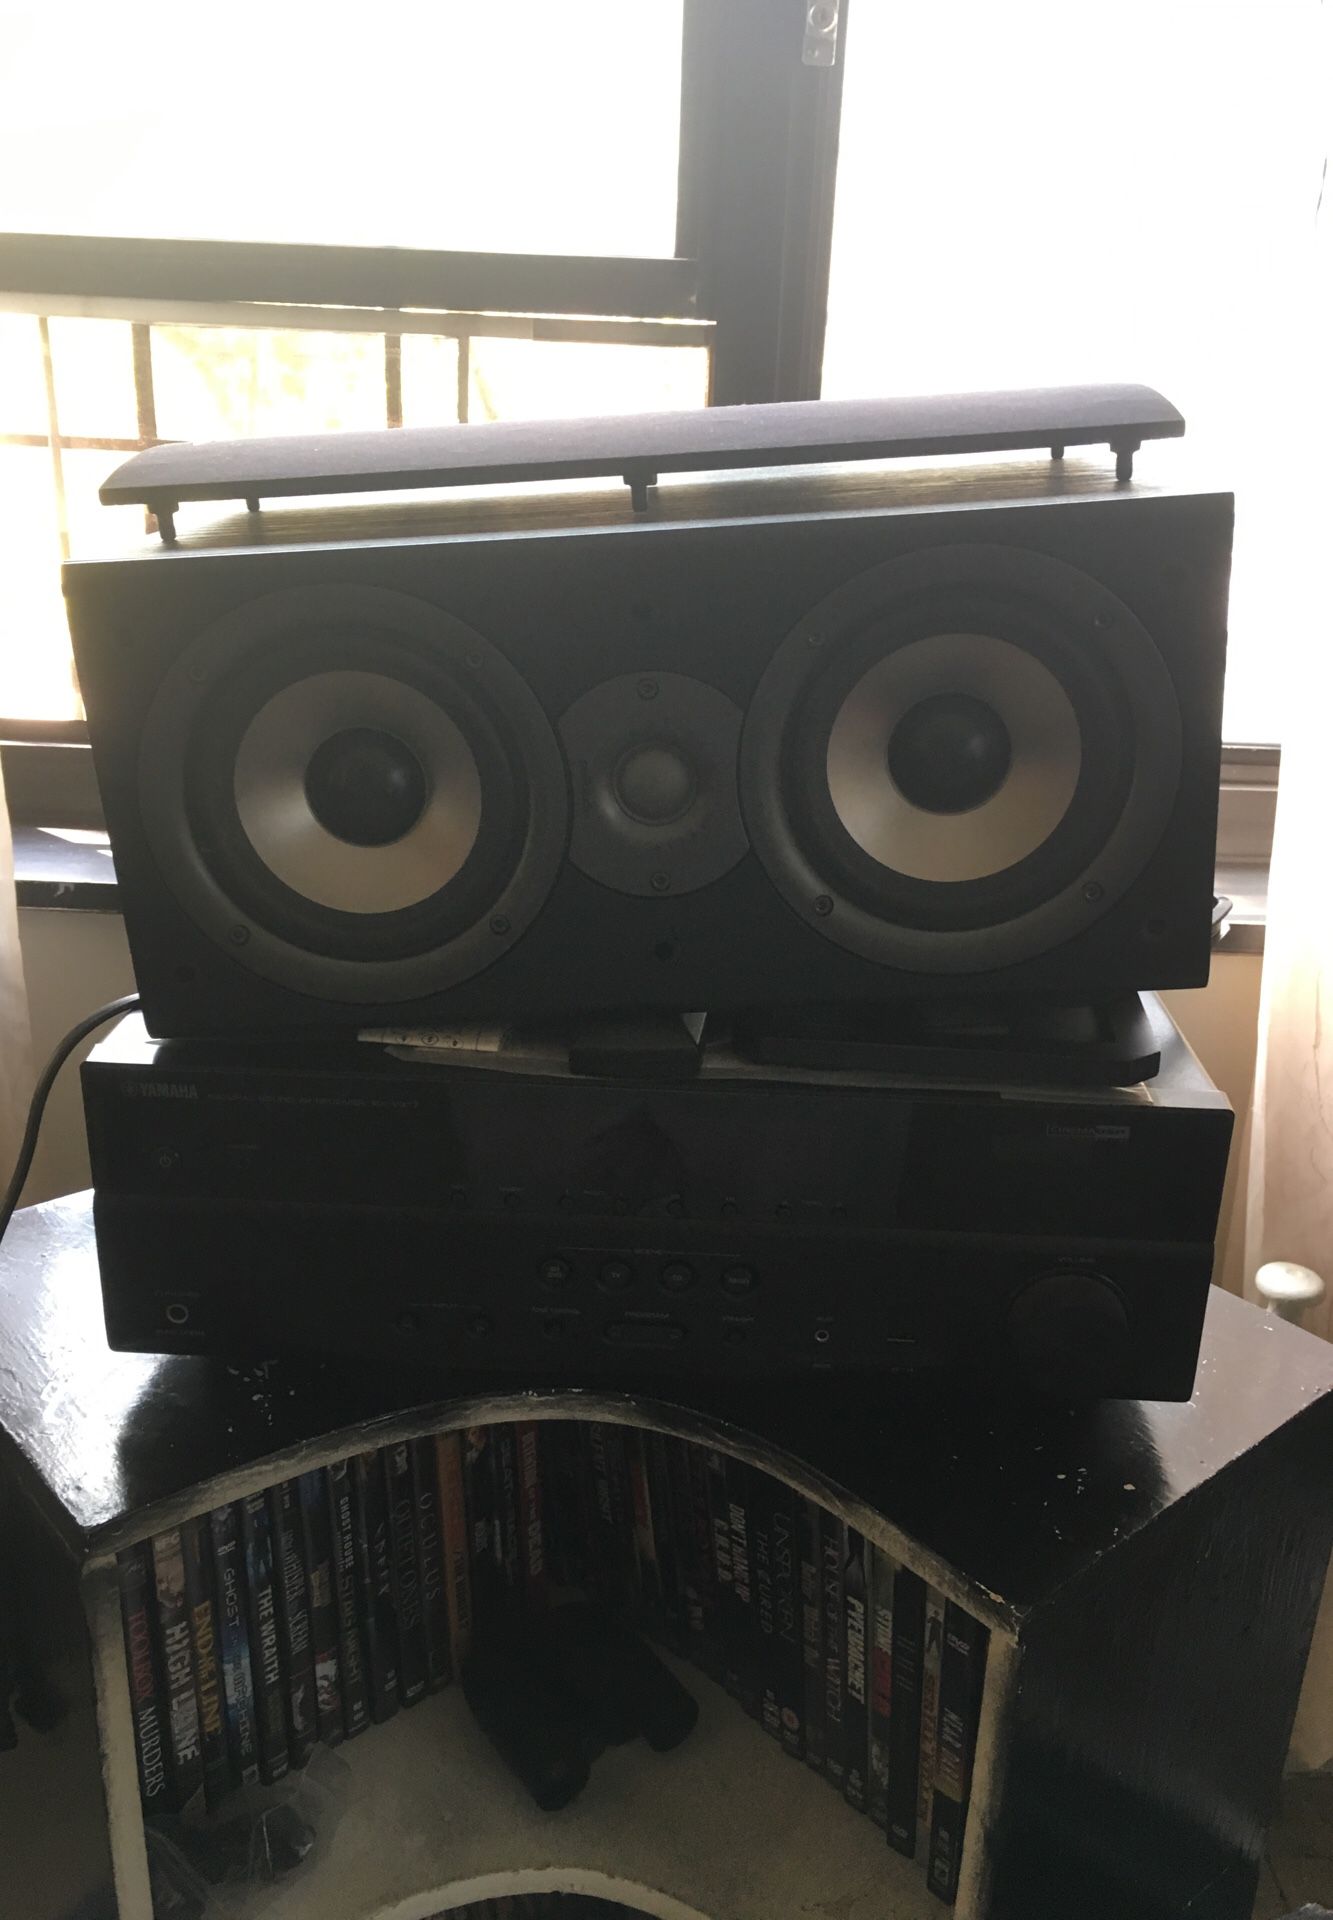 Yamaha digital stereo and Polk audio speakers